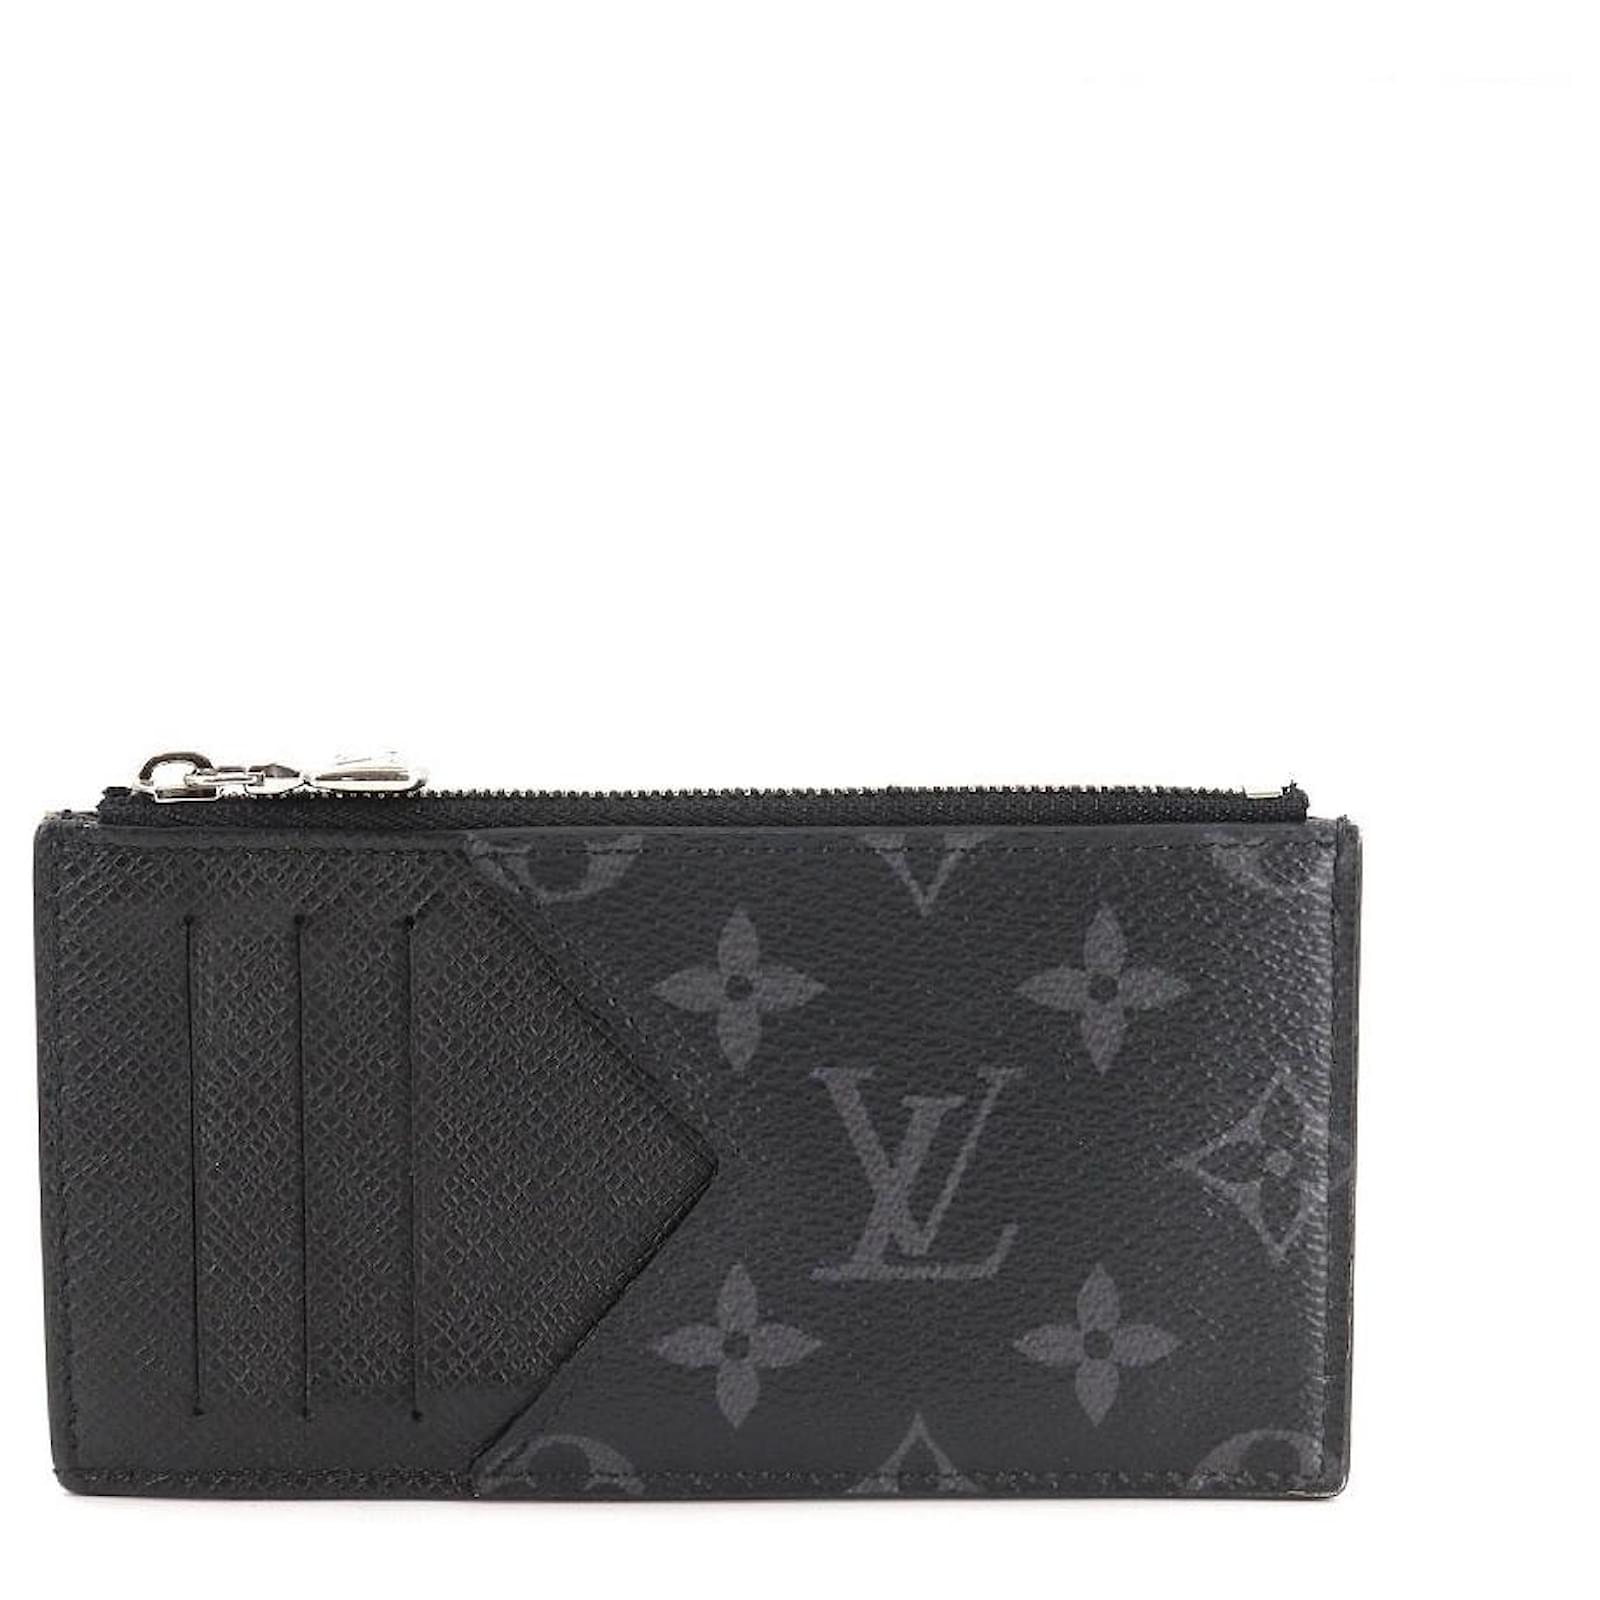 Used]LOUIS VUITTON Louis Vuitton monogram coin purse